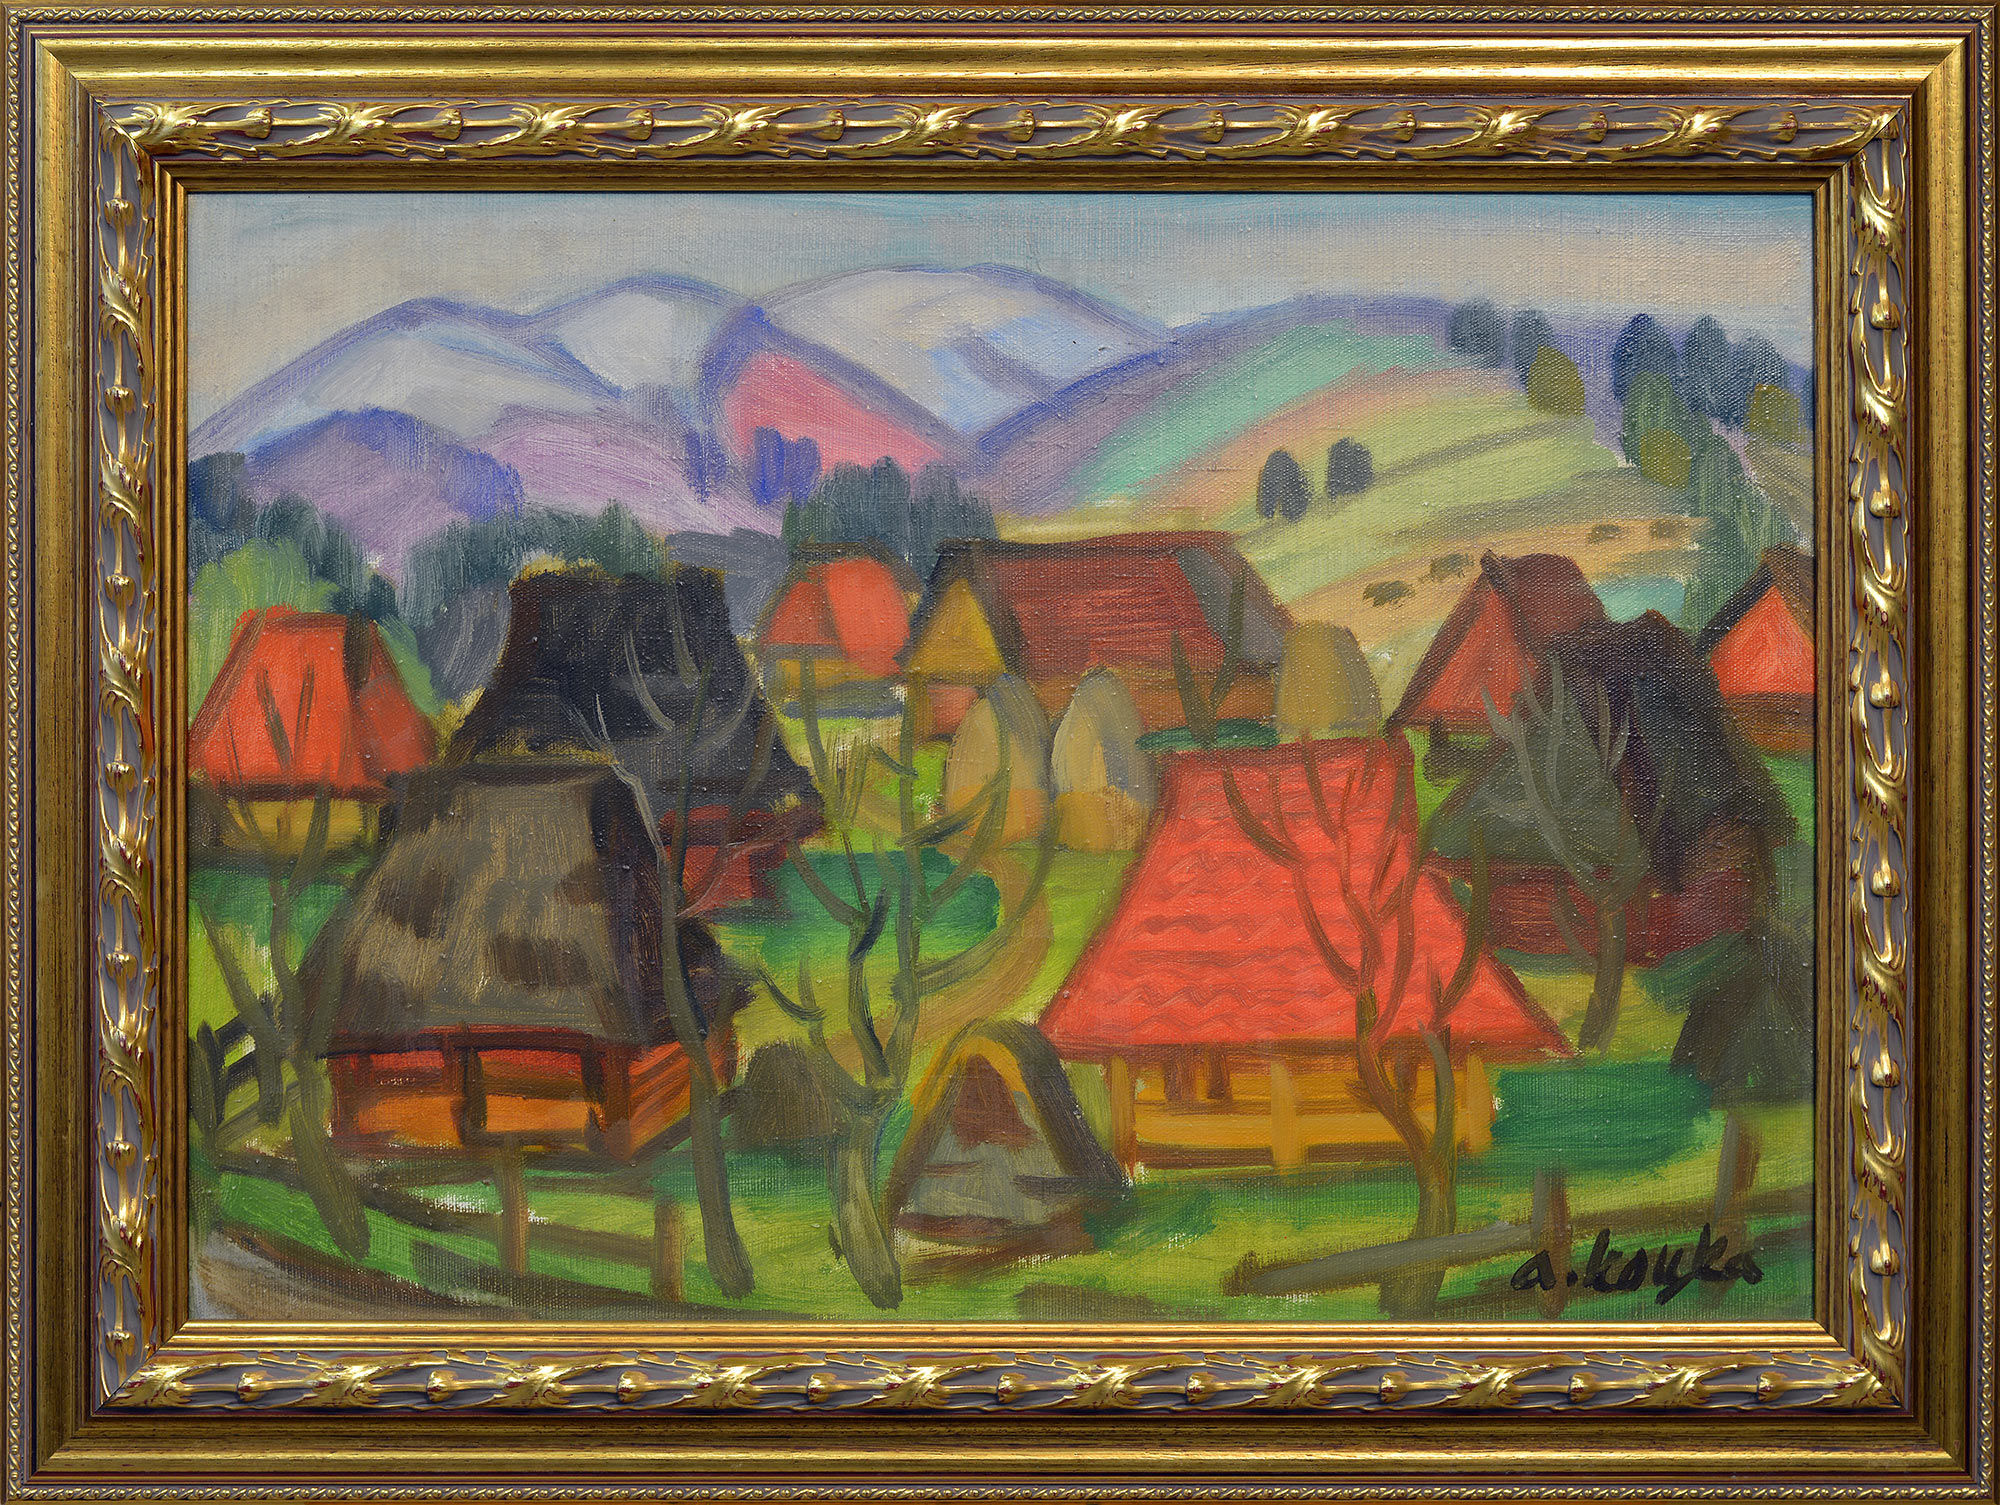 "Mountain Village", 1970s - 1